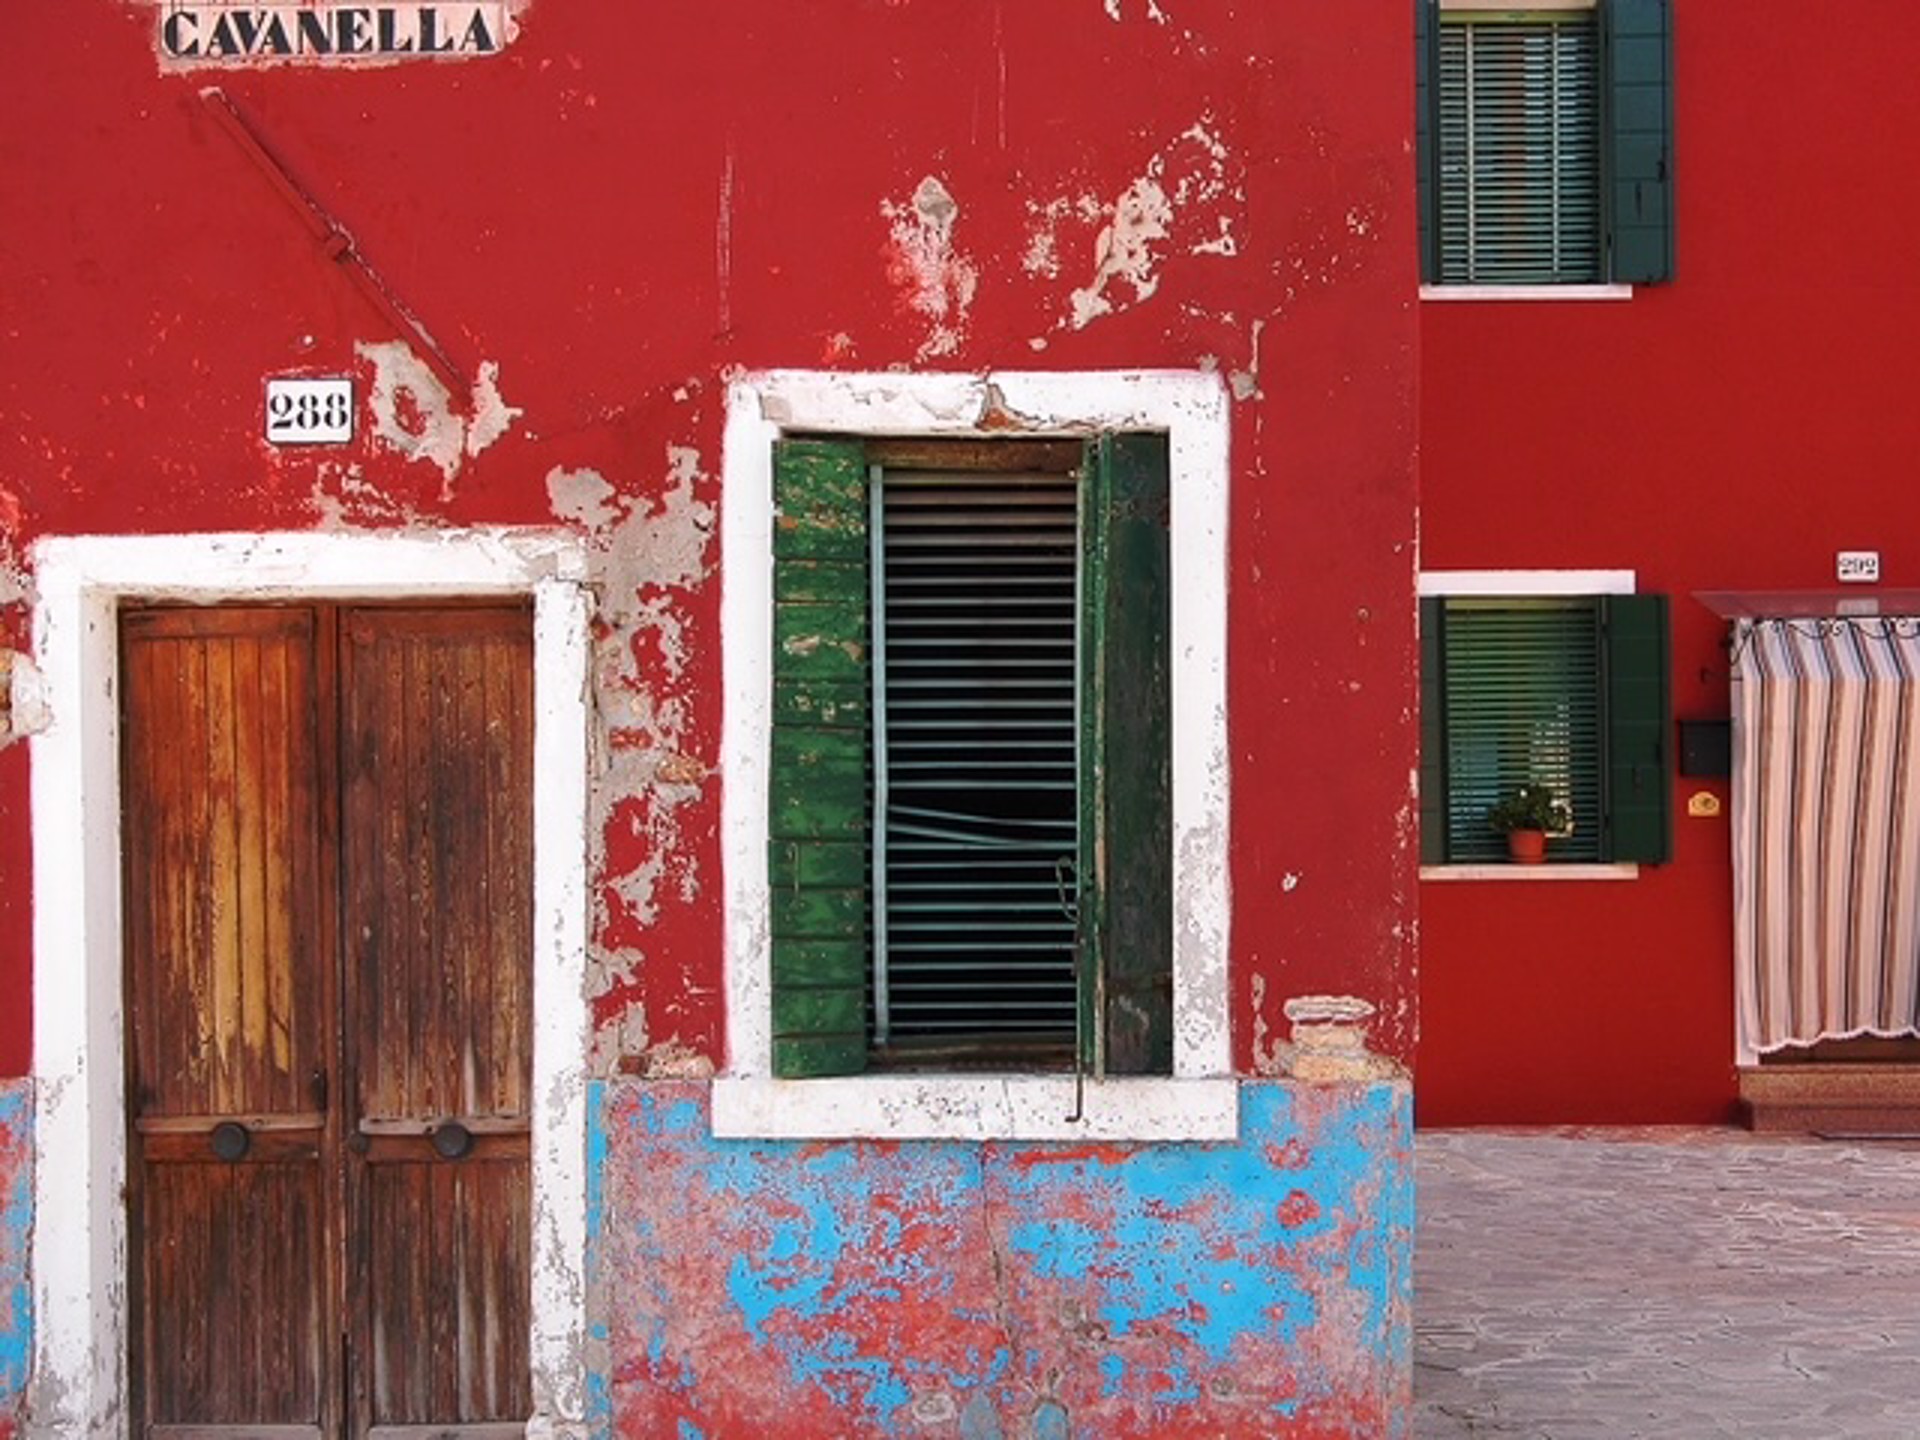 Two Red Houses on Cavanella Street by Barry Vangrov